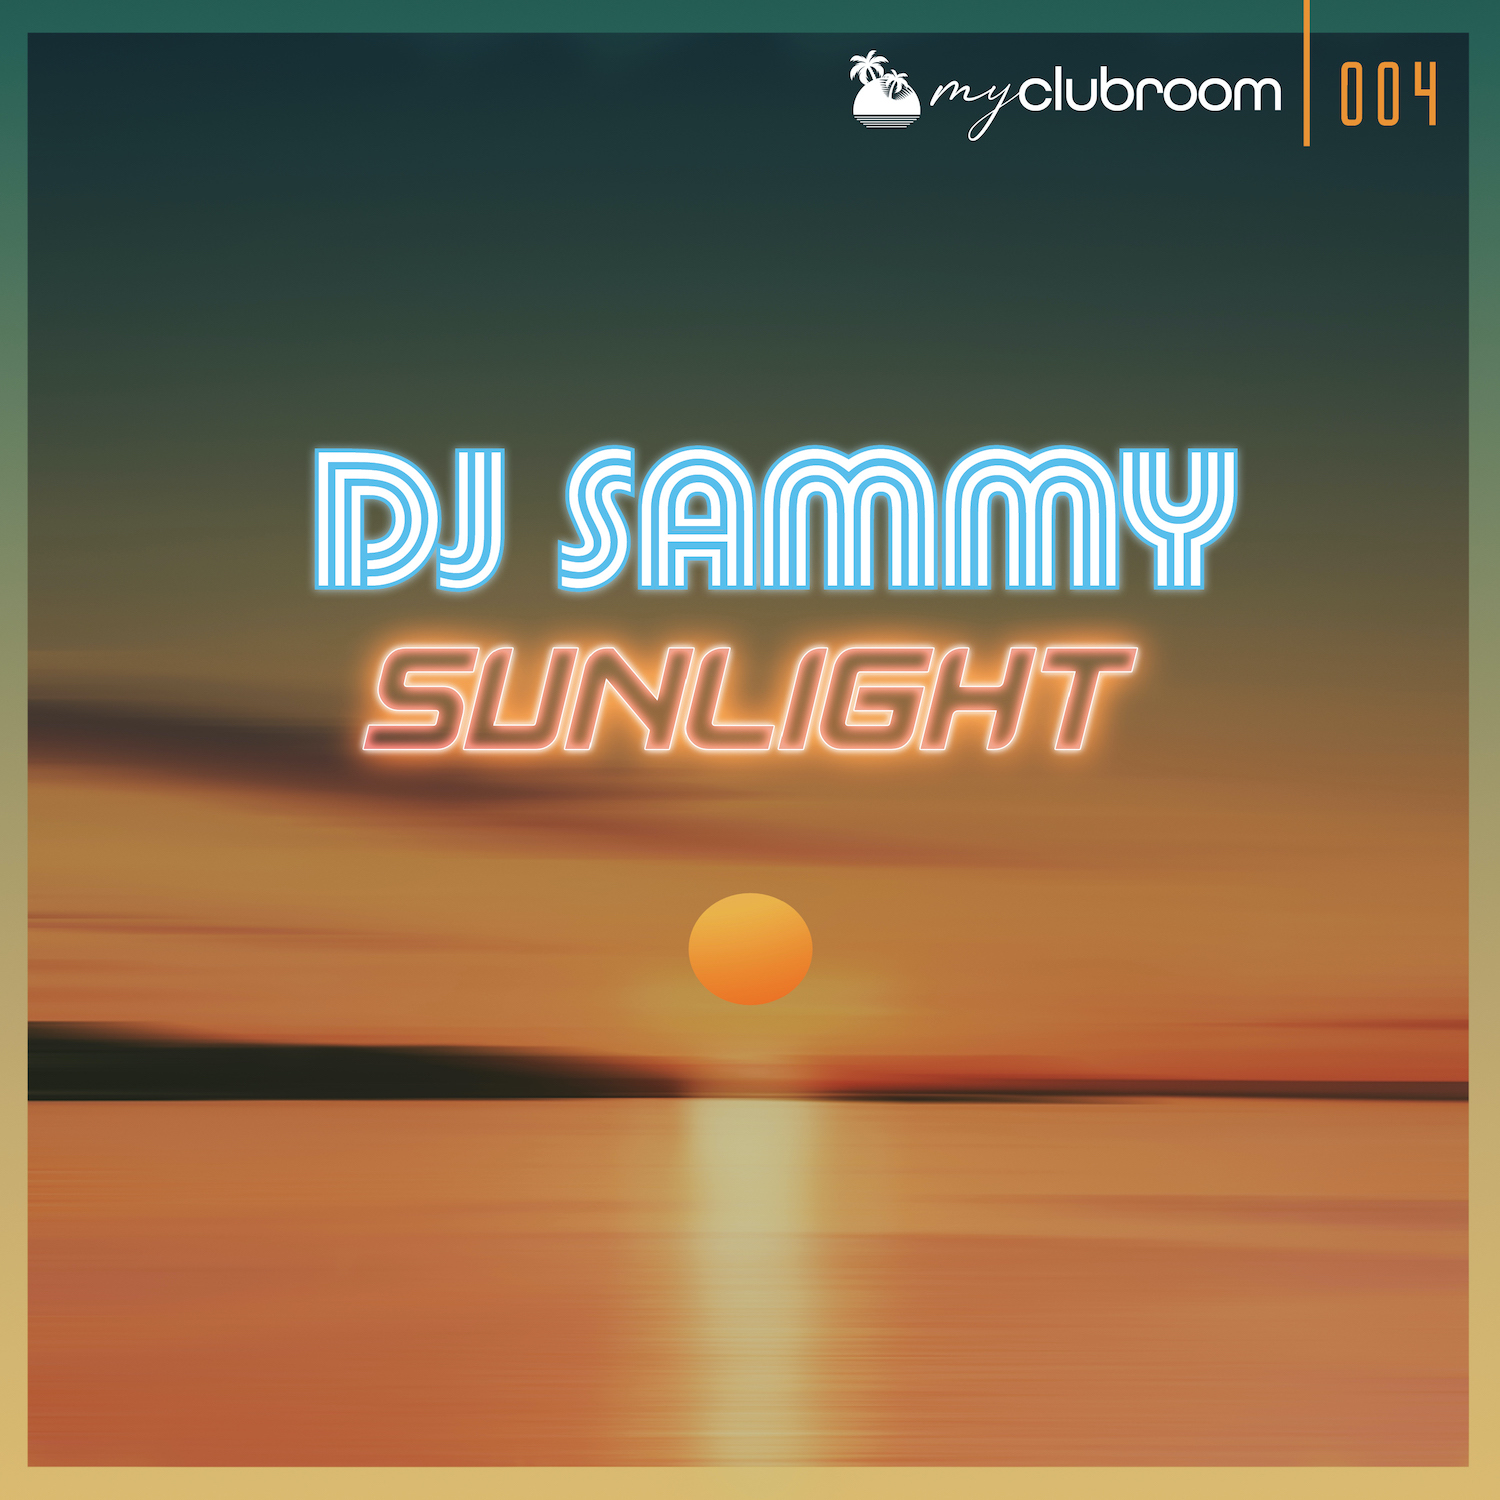  DJ Sammy "Sunlight"